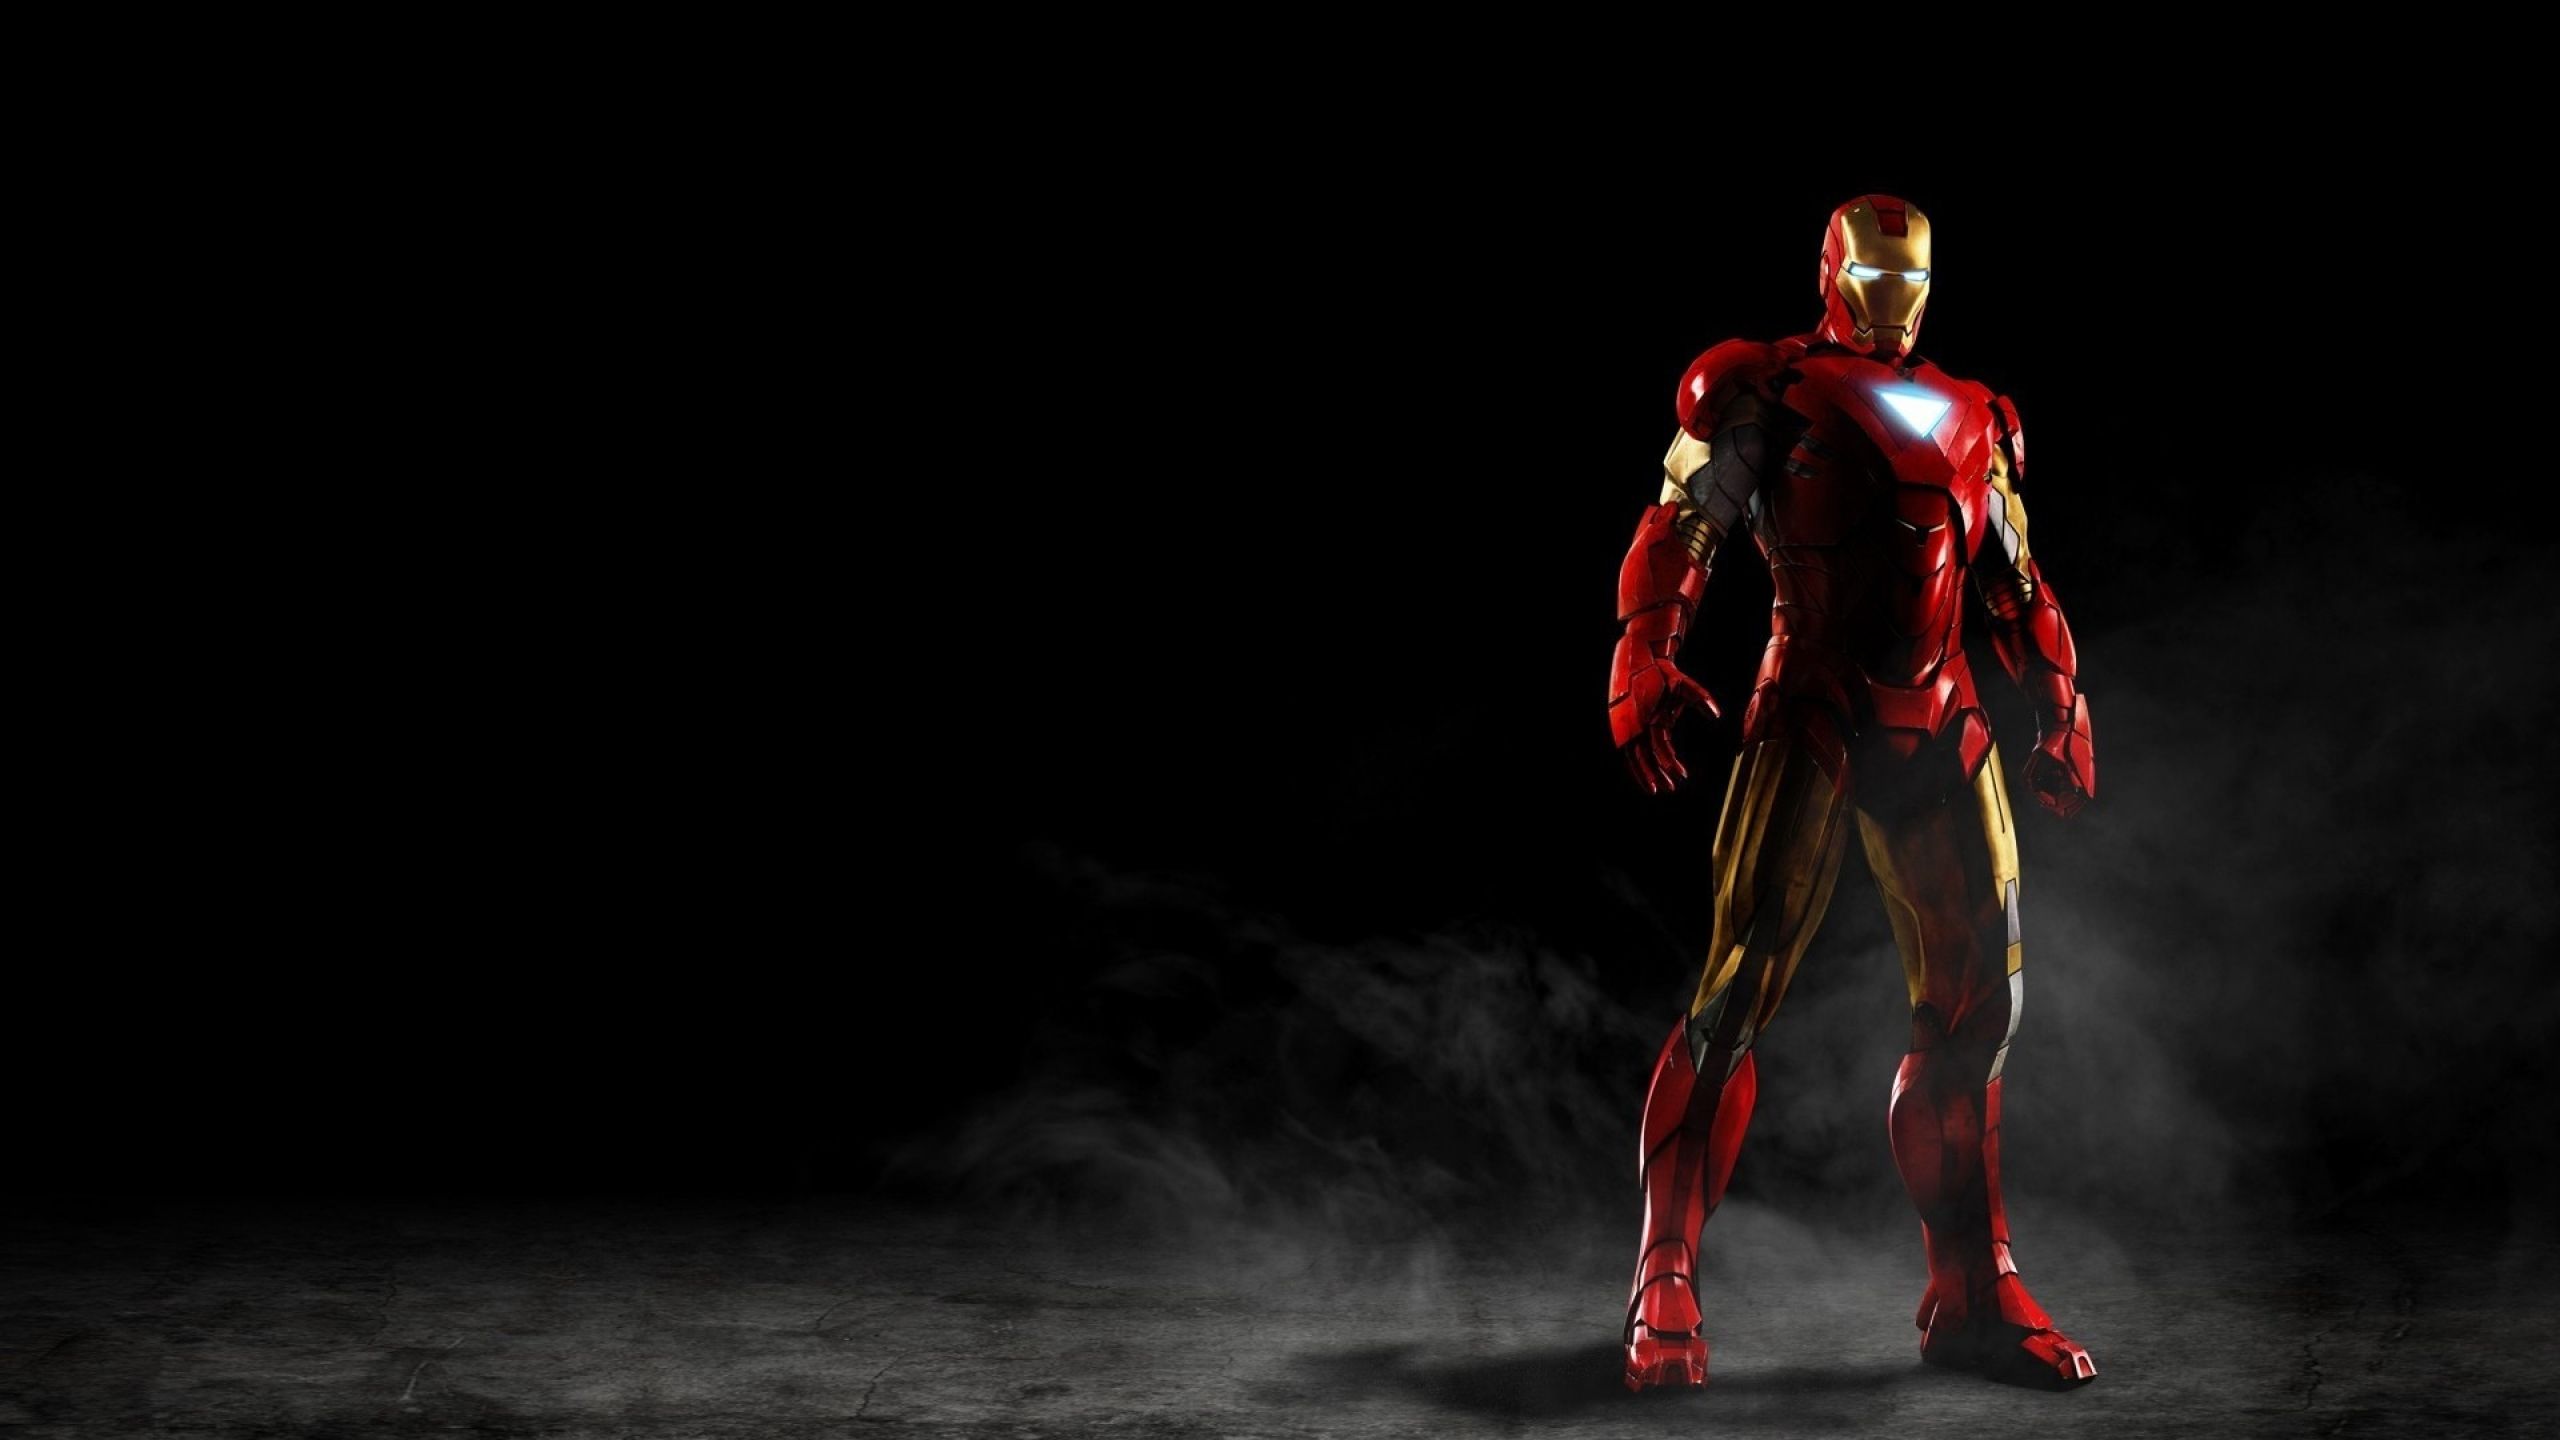 Iron Man in the Dark Wallpaper Stock Picture #51416 - ARASPOT.com